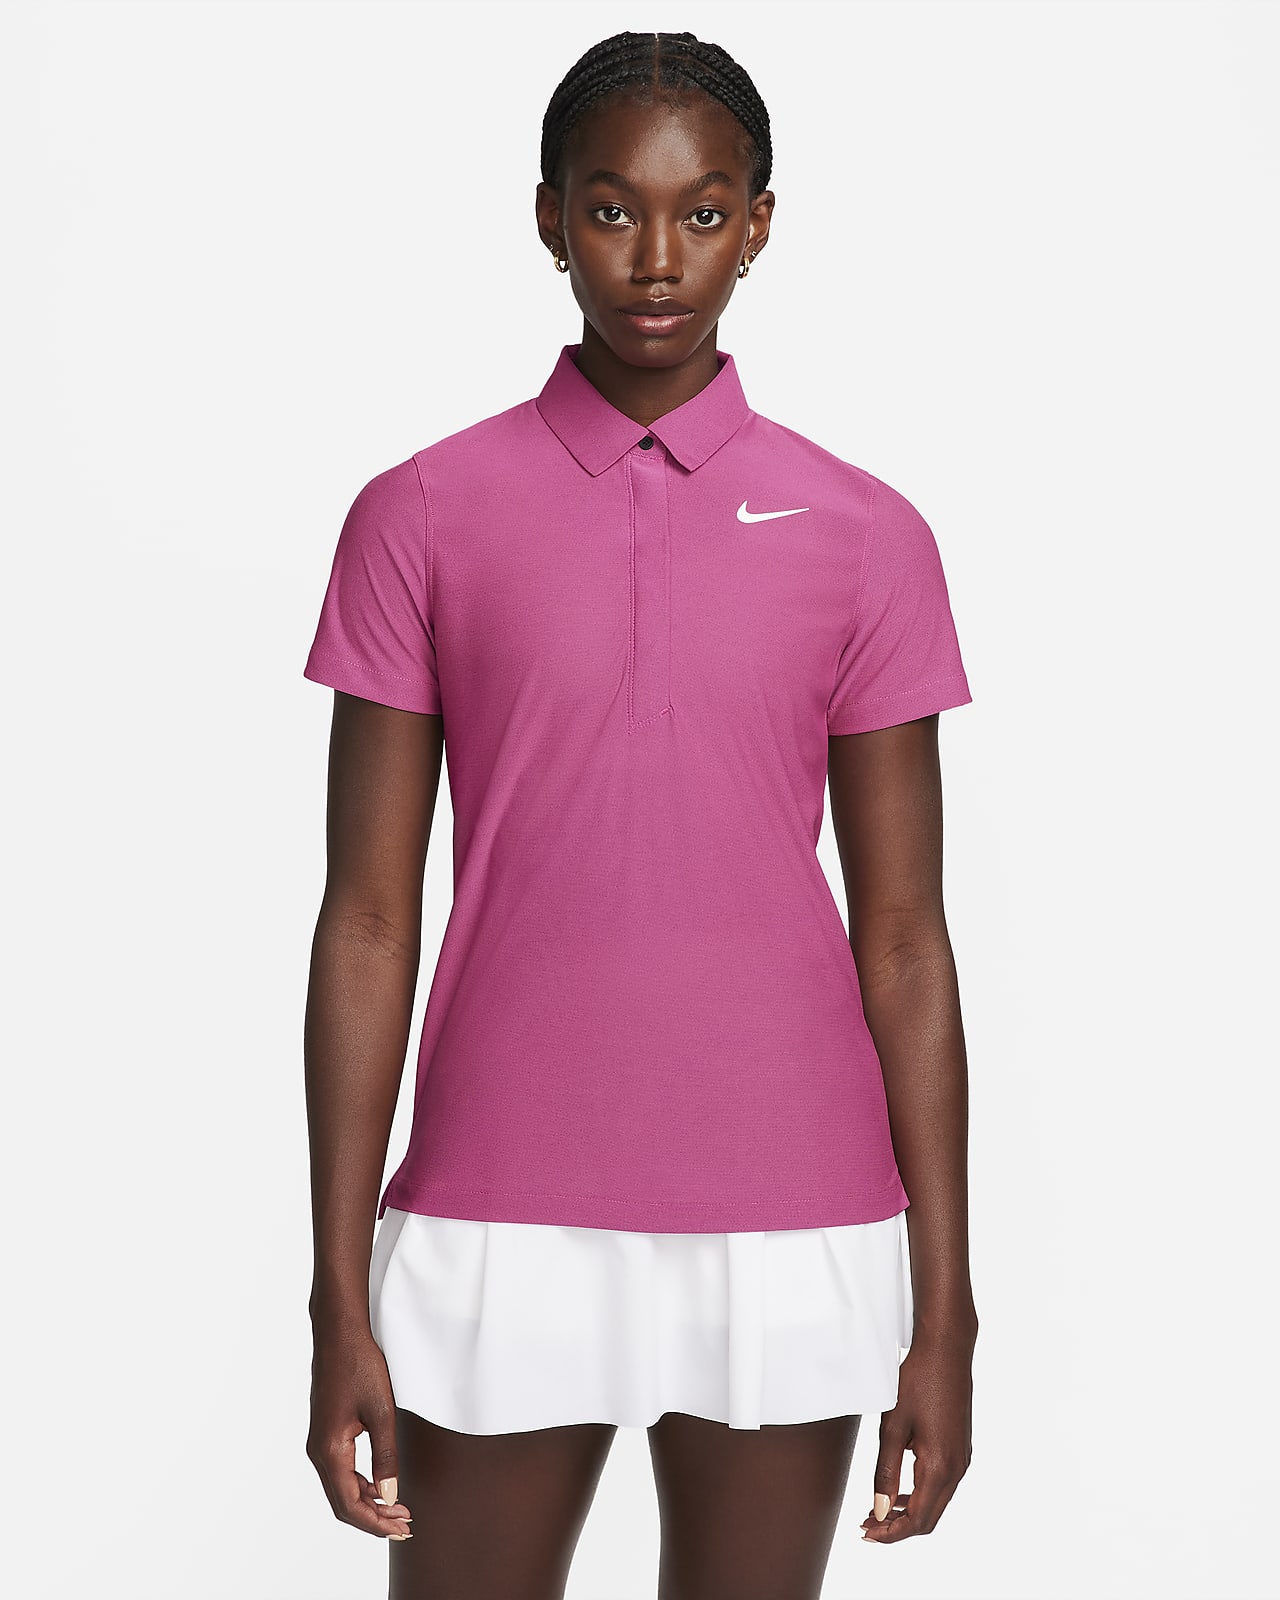 Women Tops Fashion Golf Womens Shirts Brand Clothes Women Top Polo